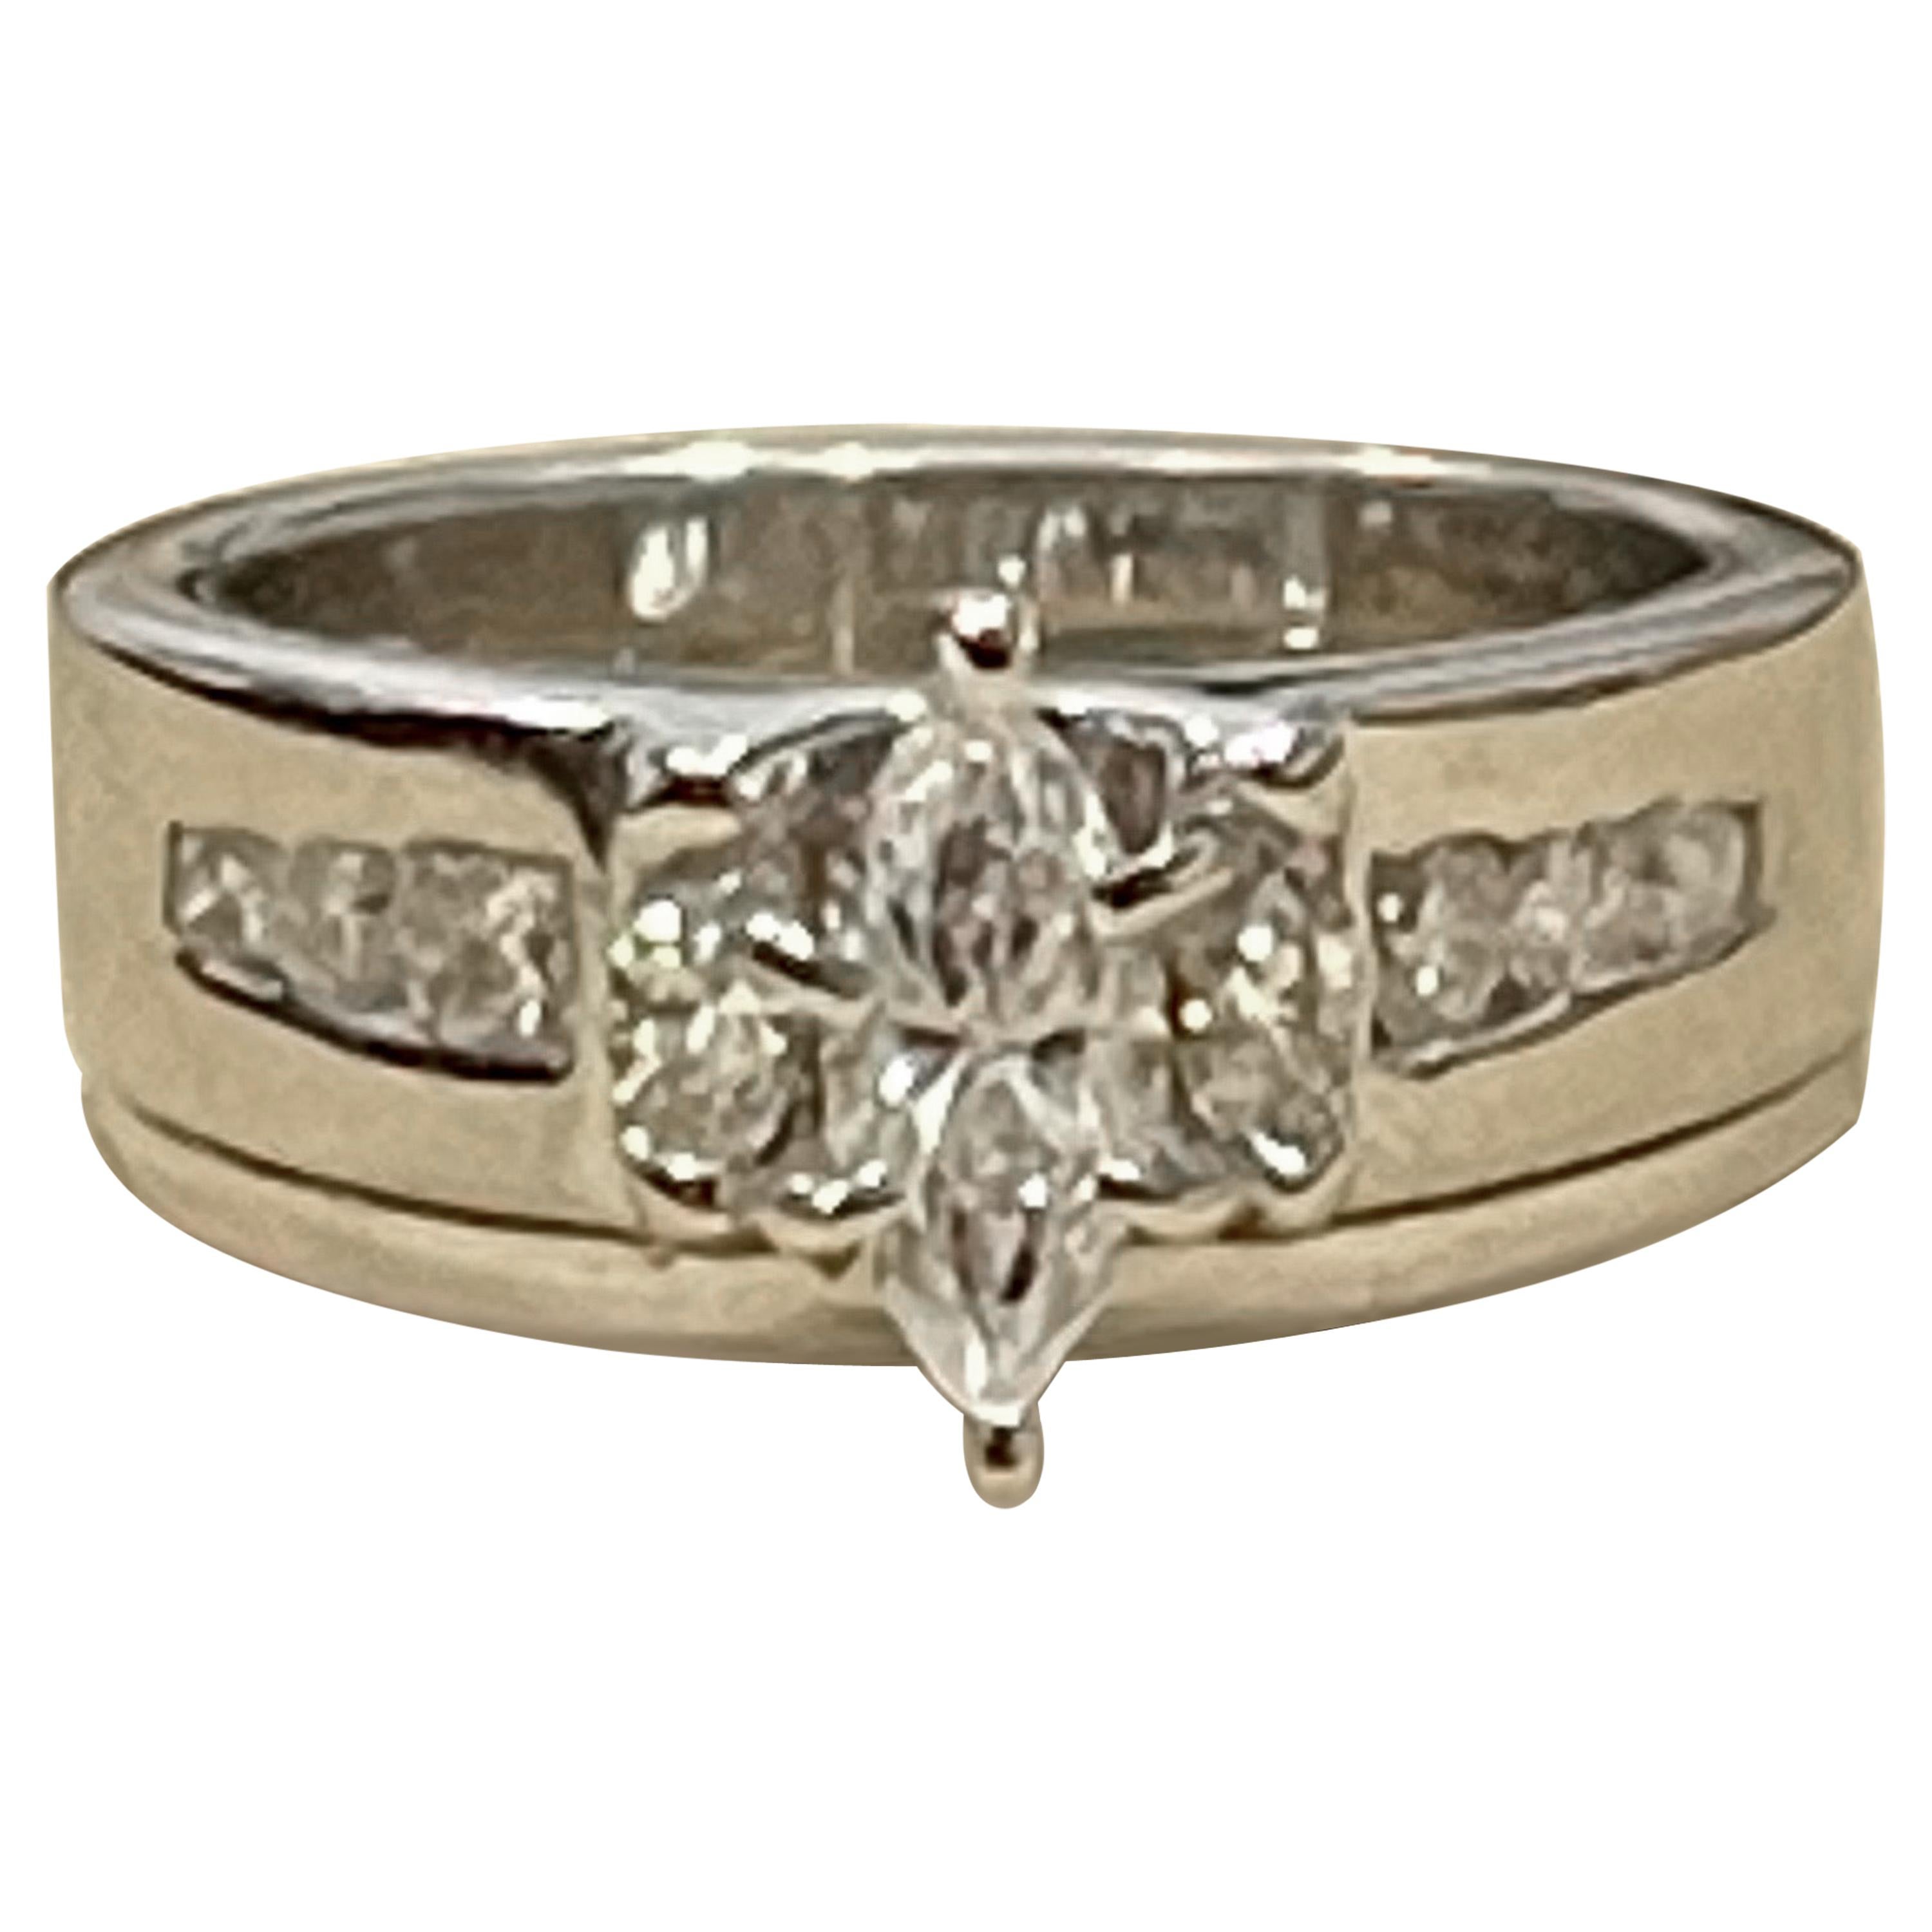 Approximately 0.75 Carat Diamond Engagement  Ring/Band 14 Karat White Gold